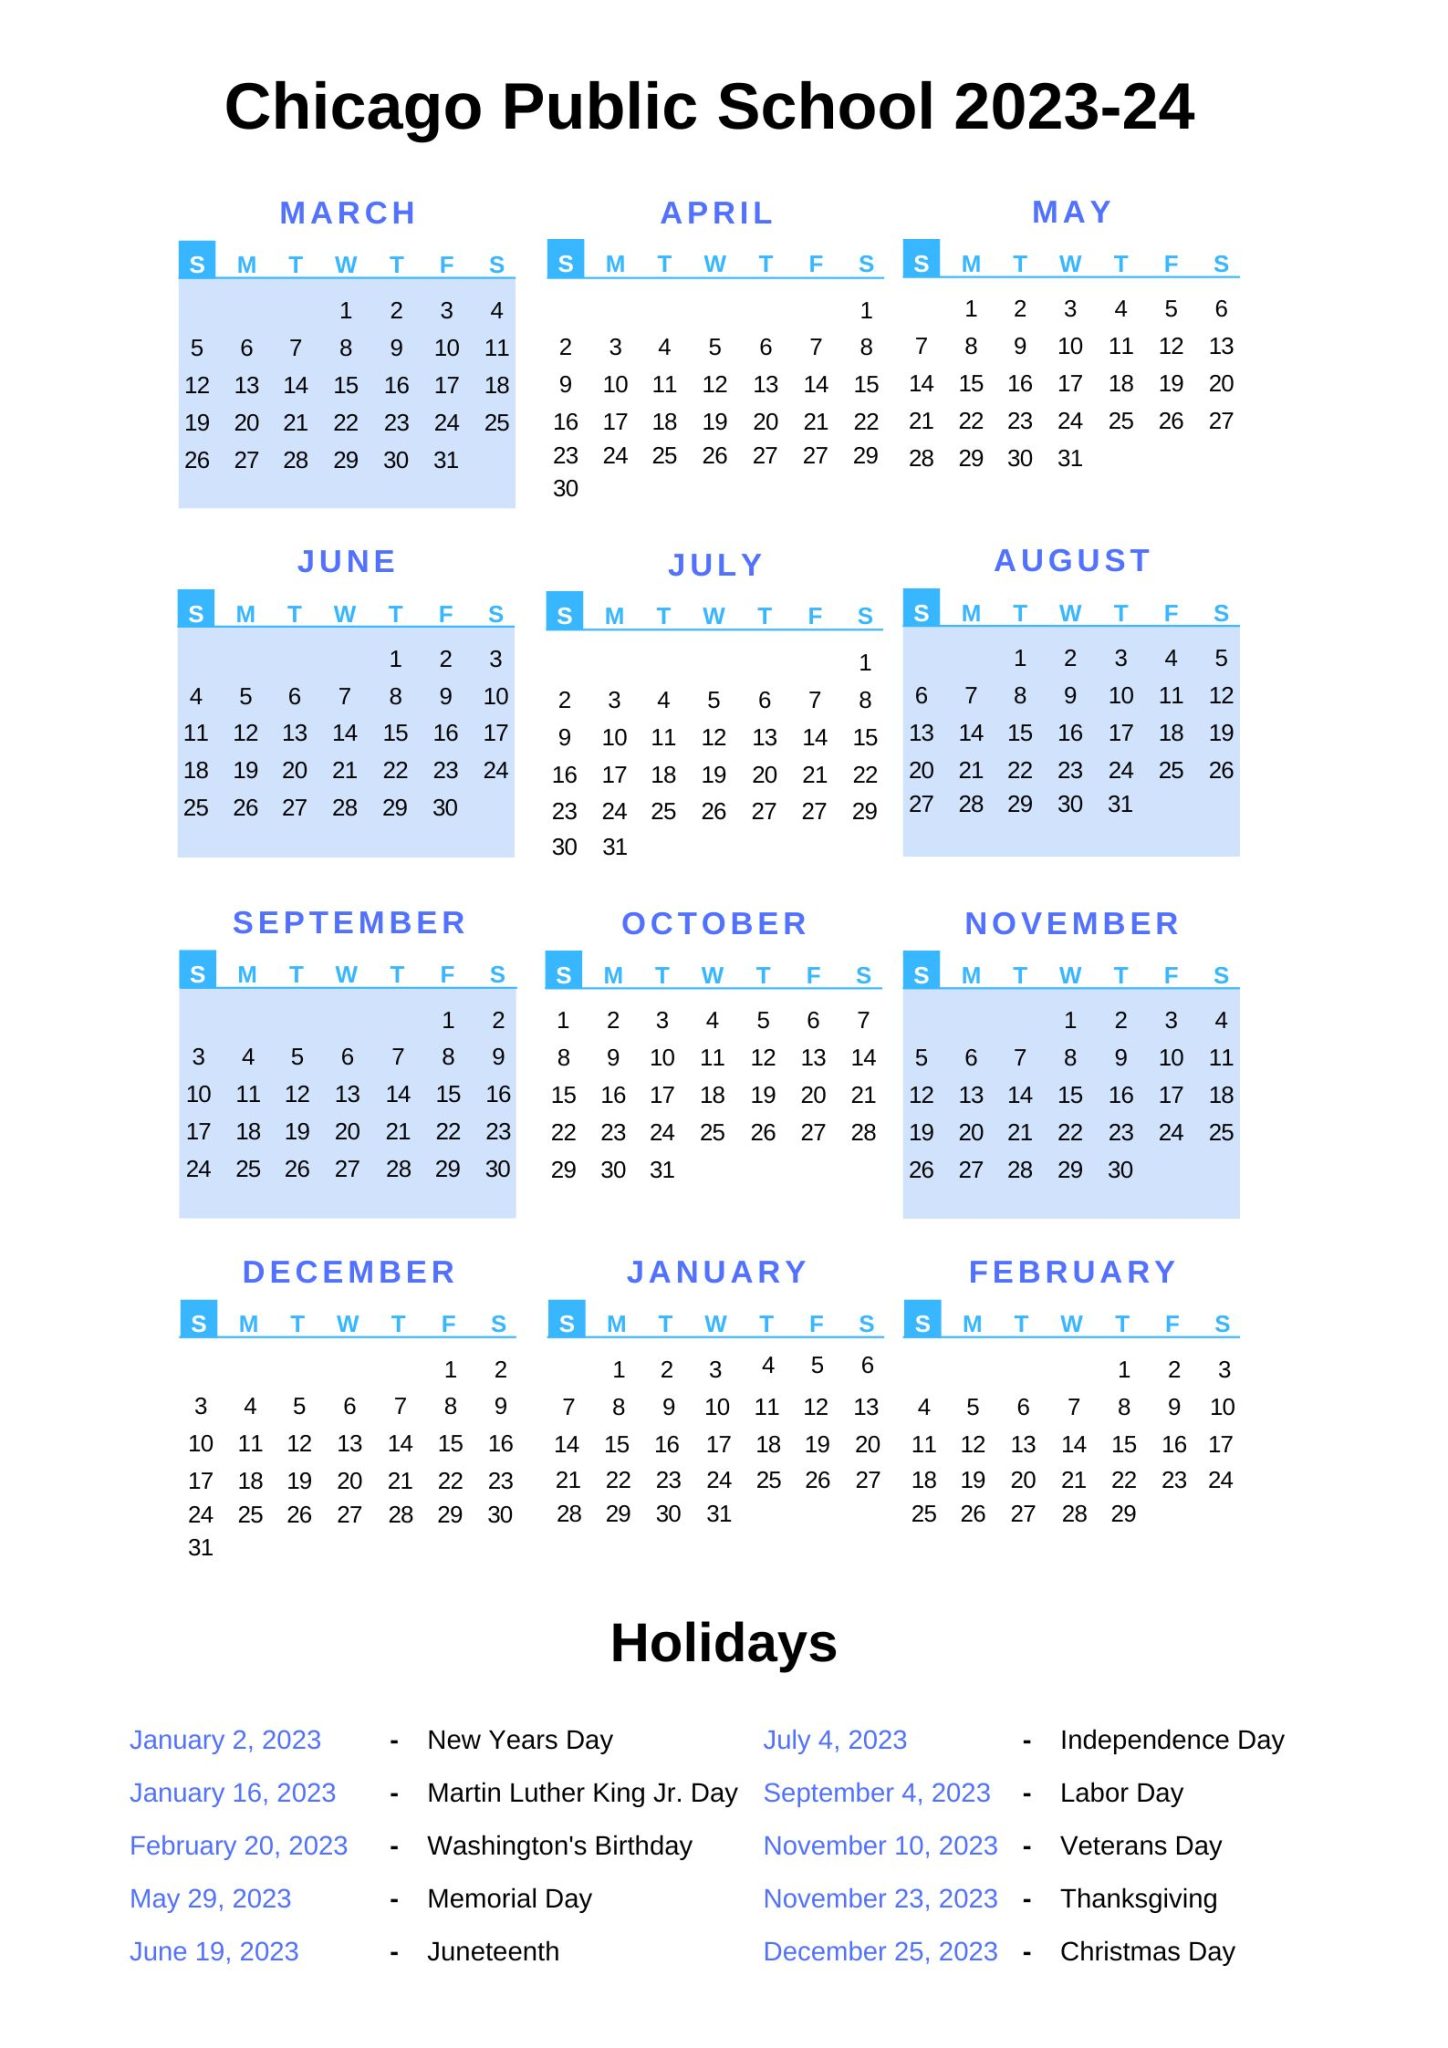 chicago-public-schools-calendar-2023-24-with-holidays